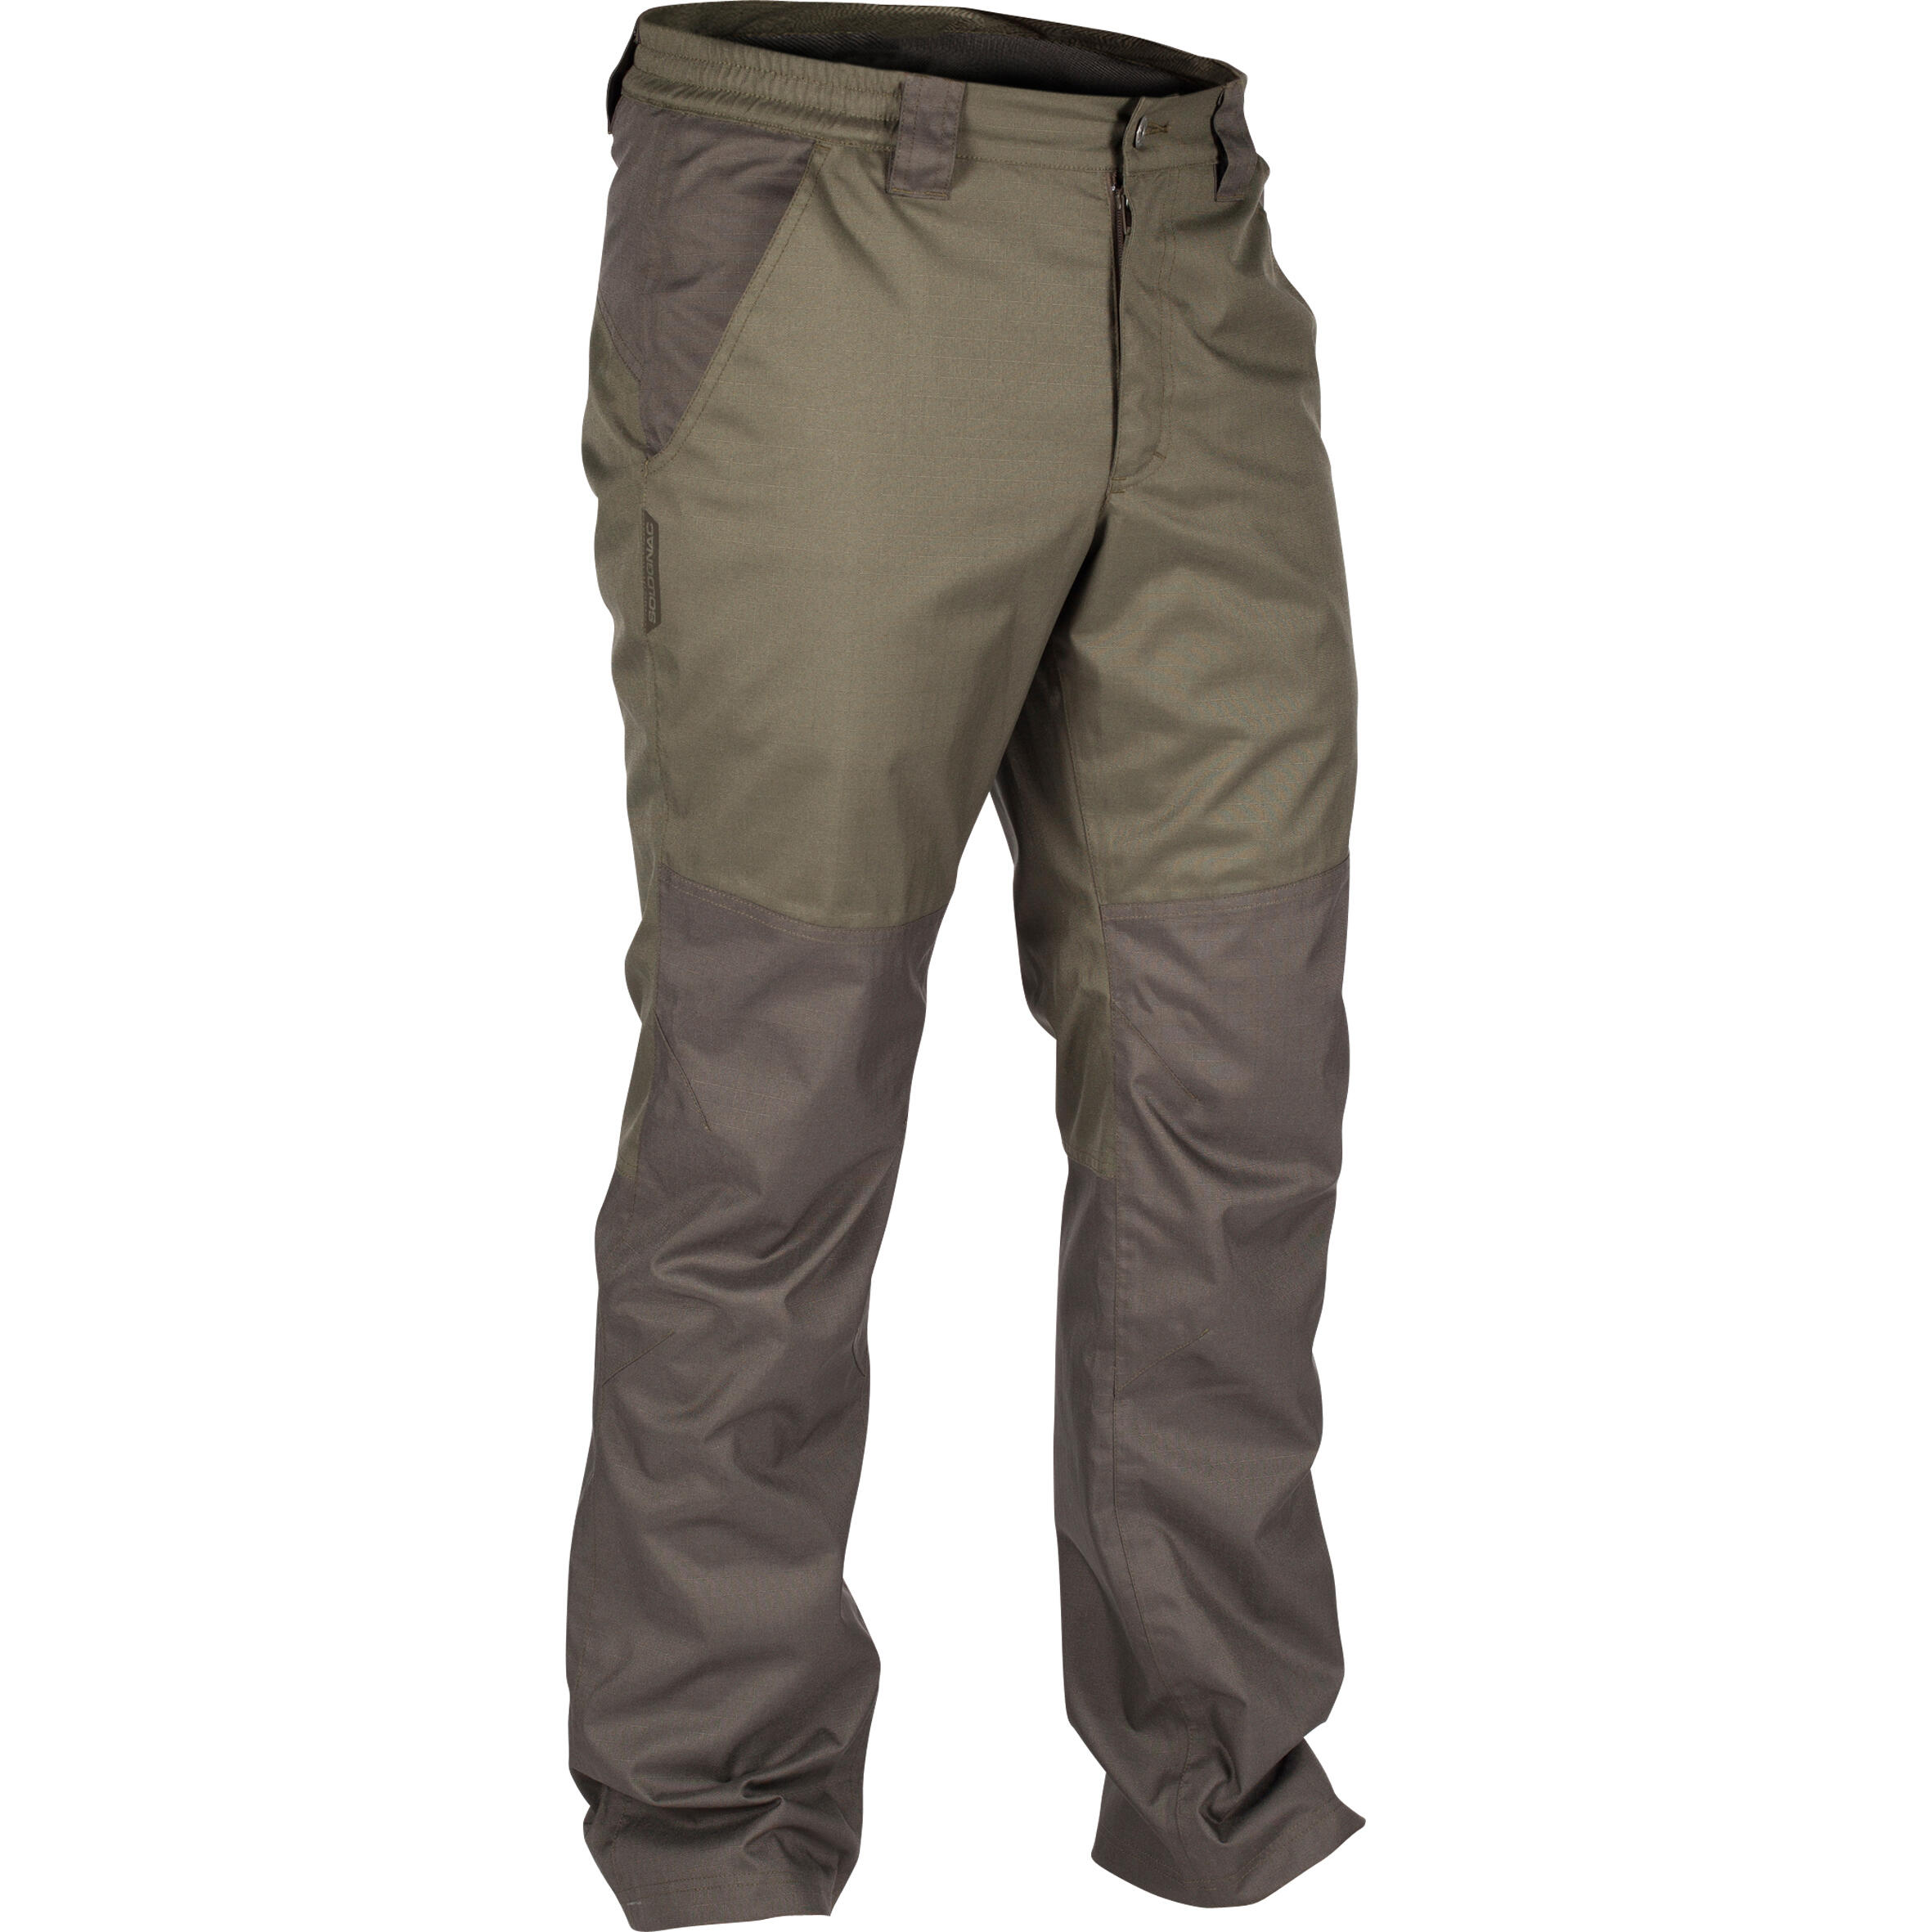 SOLOGNAC Durable Waterproof Trousers - Green